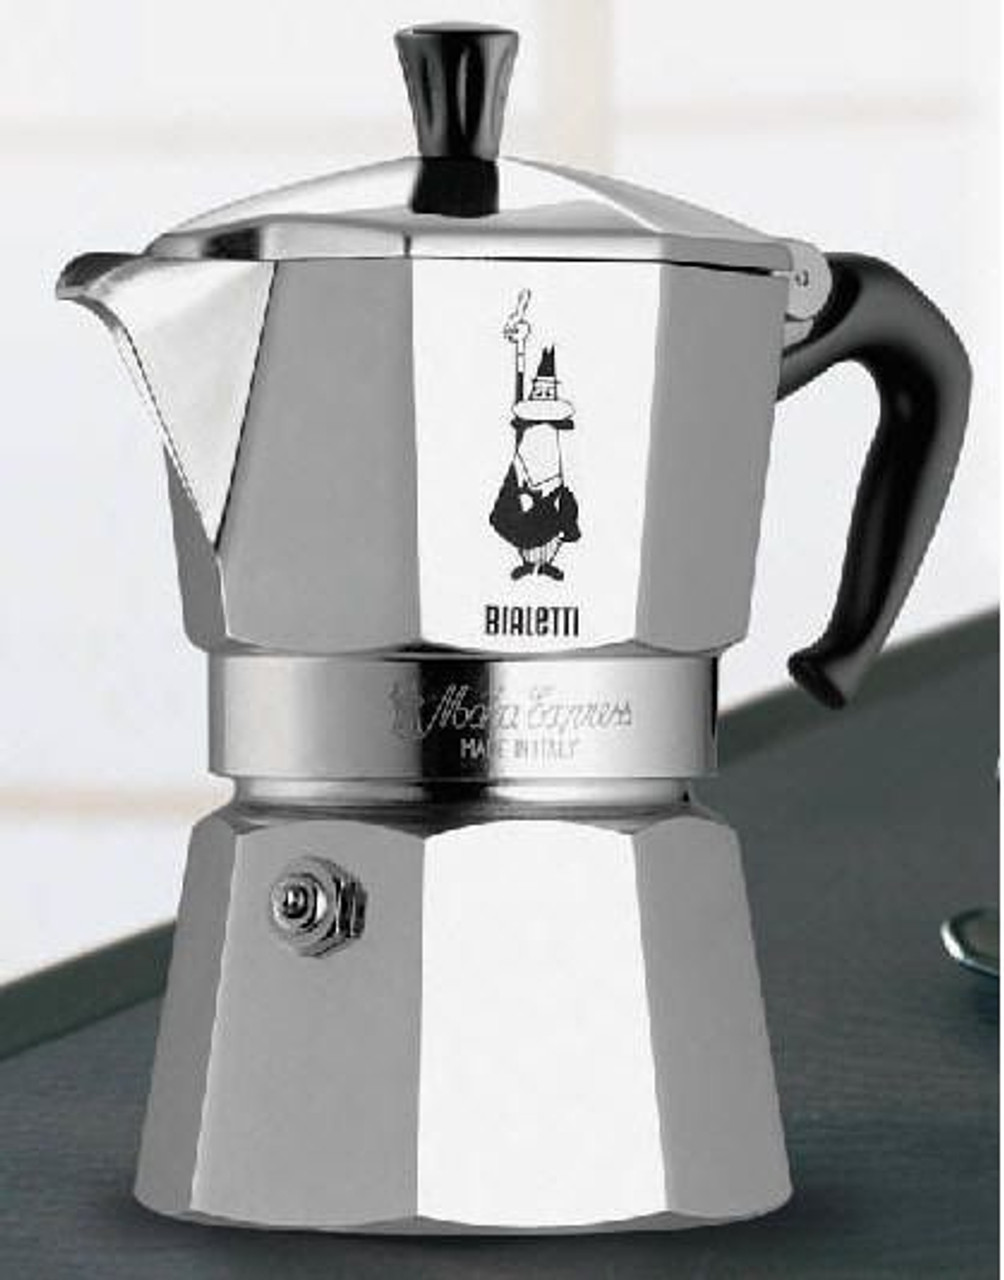 spons Betrouwbaar Bekritiseren Bialetti Stovetop Espresso Maker, 1 Cup - Fante's Kitchen Shop - Since 1906